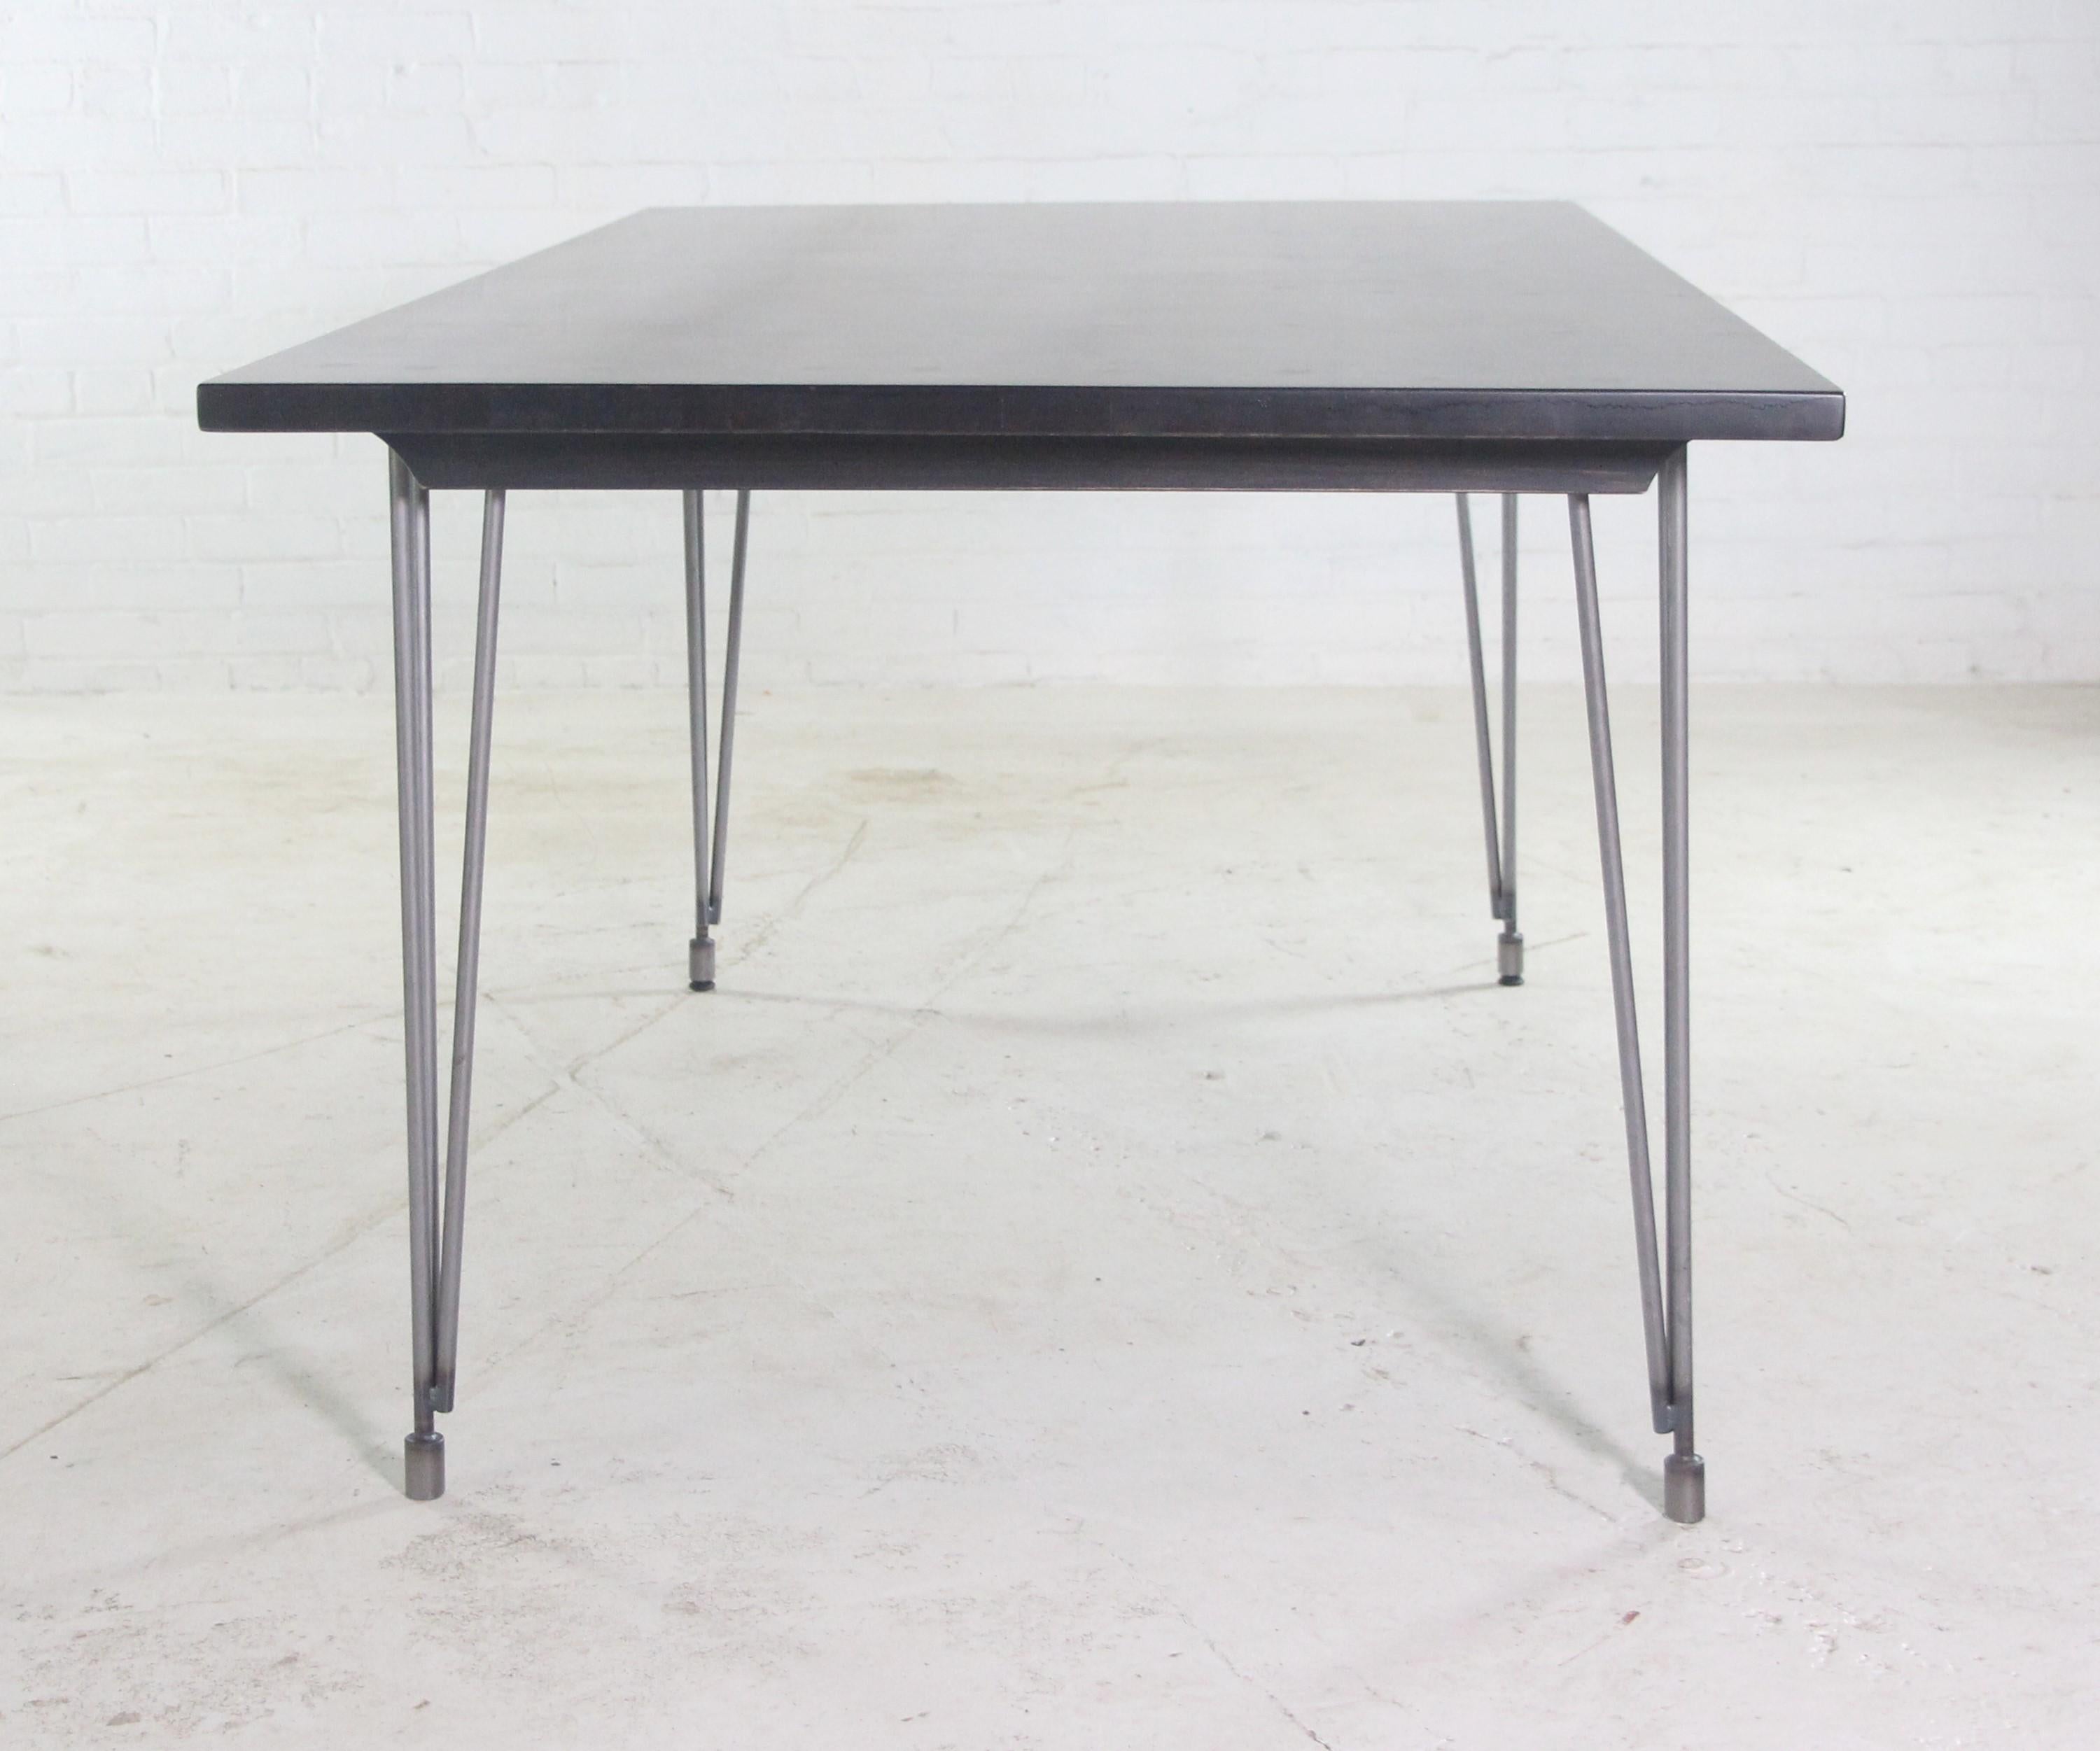 Steel Ebony Industrial Flooring 6 ft Dining Table w Hairpin Legs